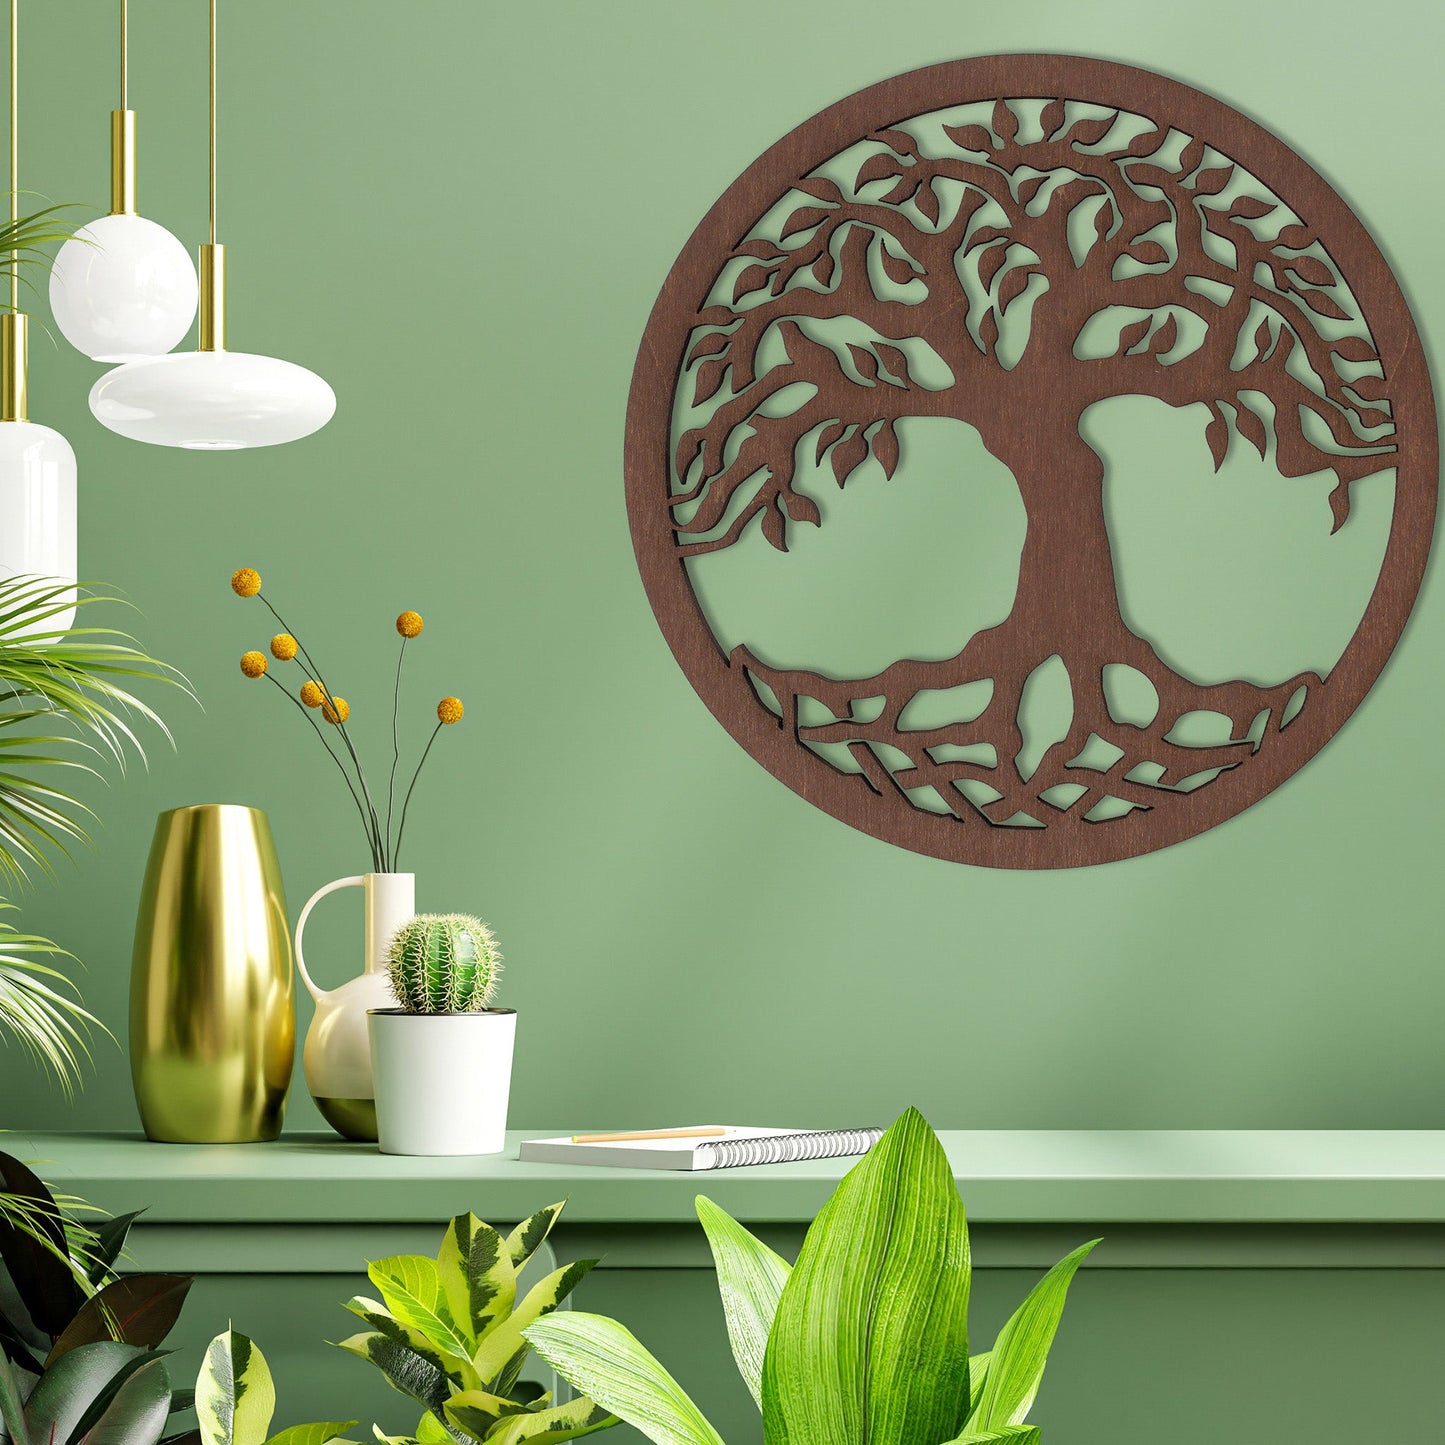 Wandbild Holz "Baum des Lebens" V3 - Nanino Design Onlineshop -